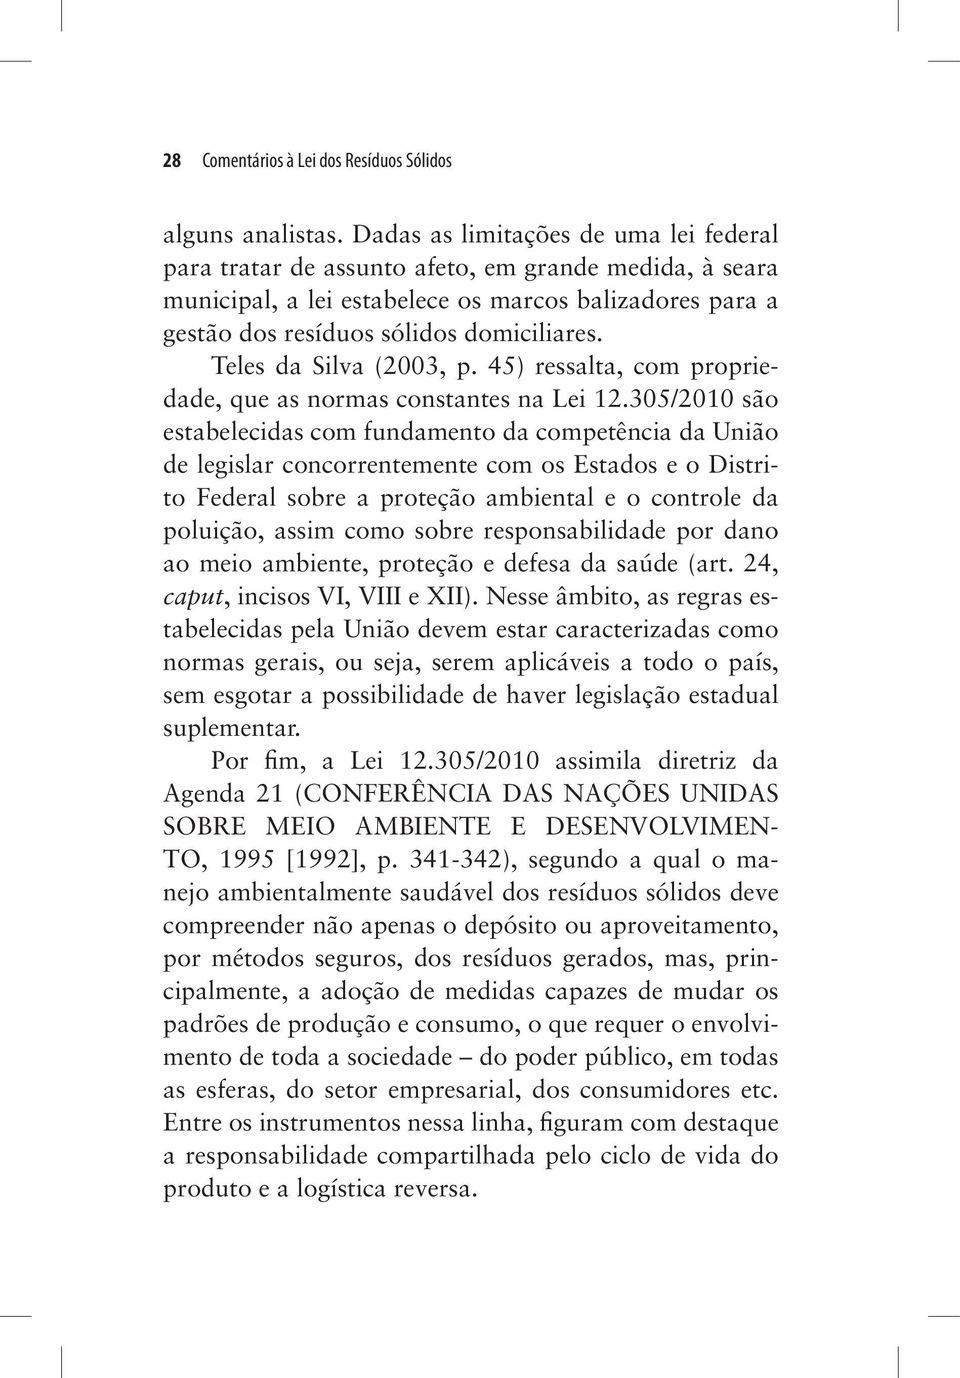 Teles da Silva (2003, p. 45) ressalta, com propriedade, que as normas constantes na Lei 12.